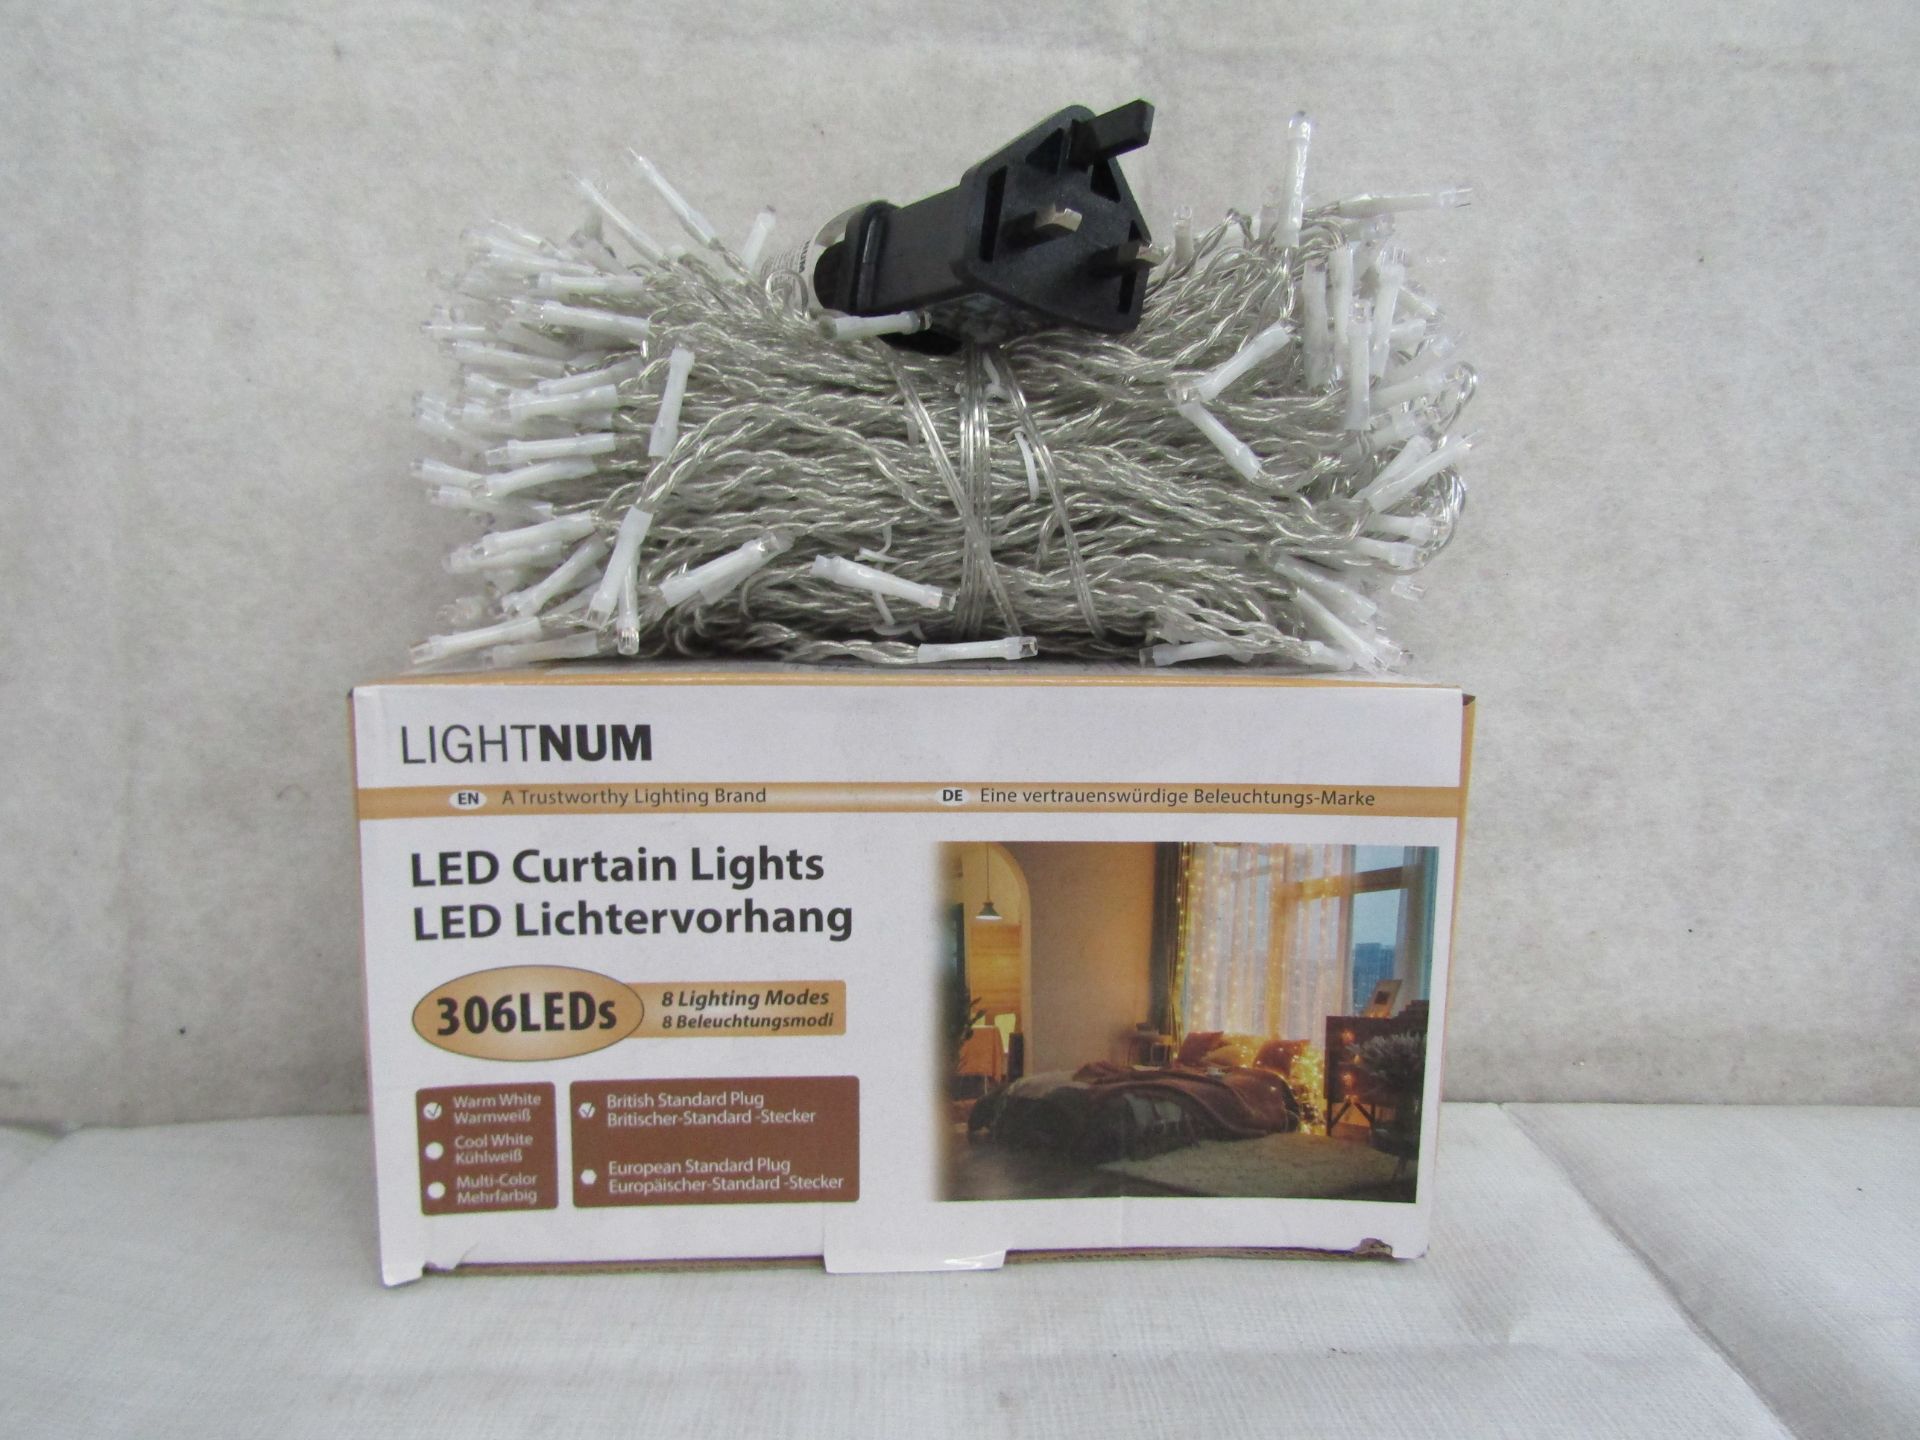 2X LIGHTNUM - 306 LED Curtain Lights / Warm White / 8 Lighting Modes / 3M x 3M - Boxed.